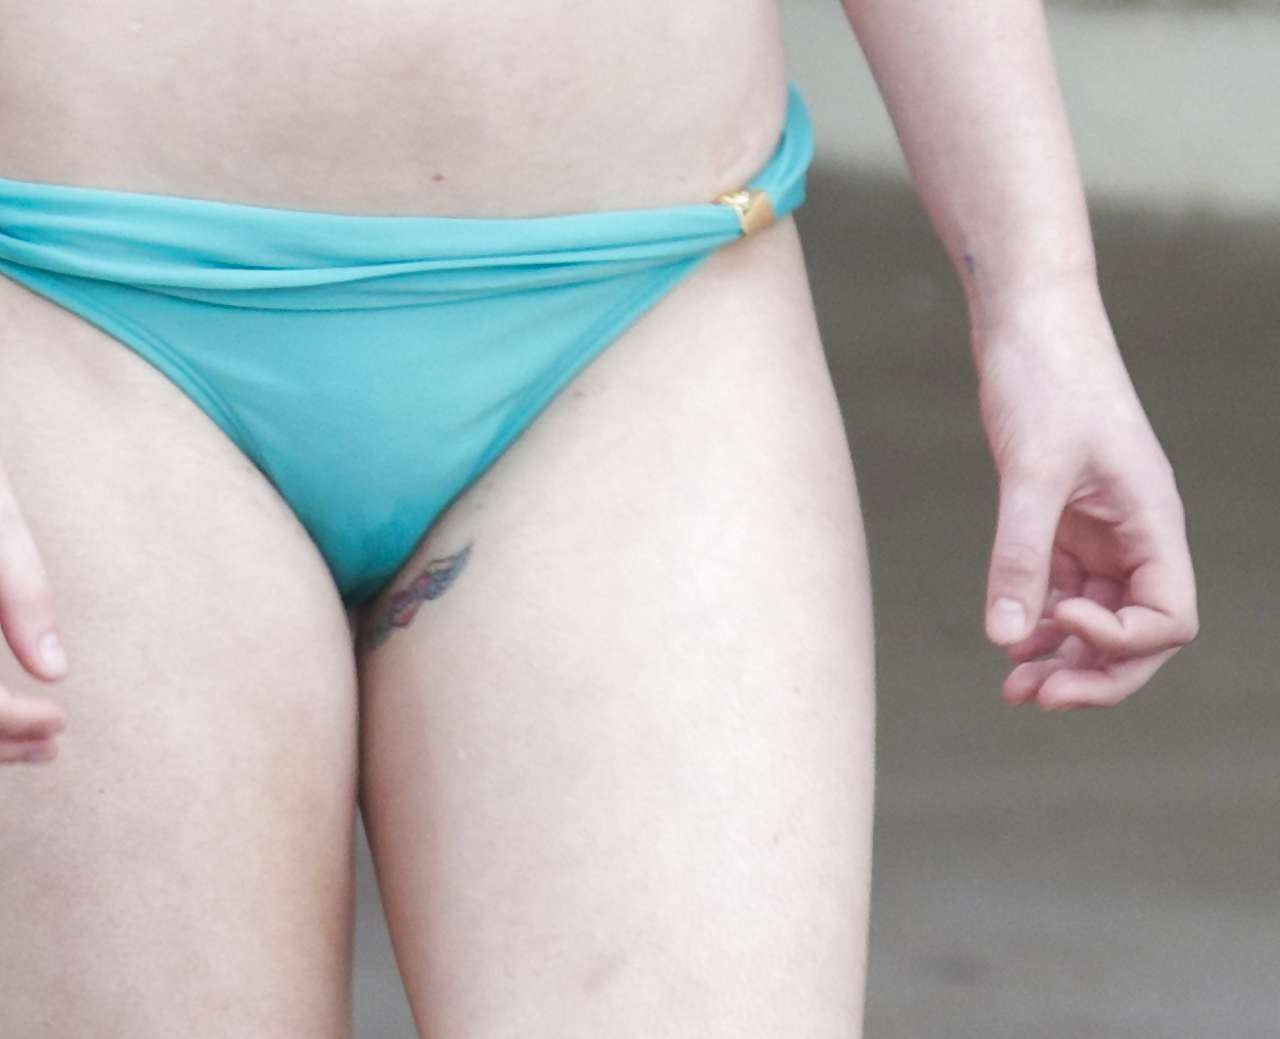 Helen flanagan en bikini bleu sur la plage avec des photos paparazzi.
 #75294874